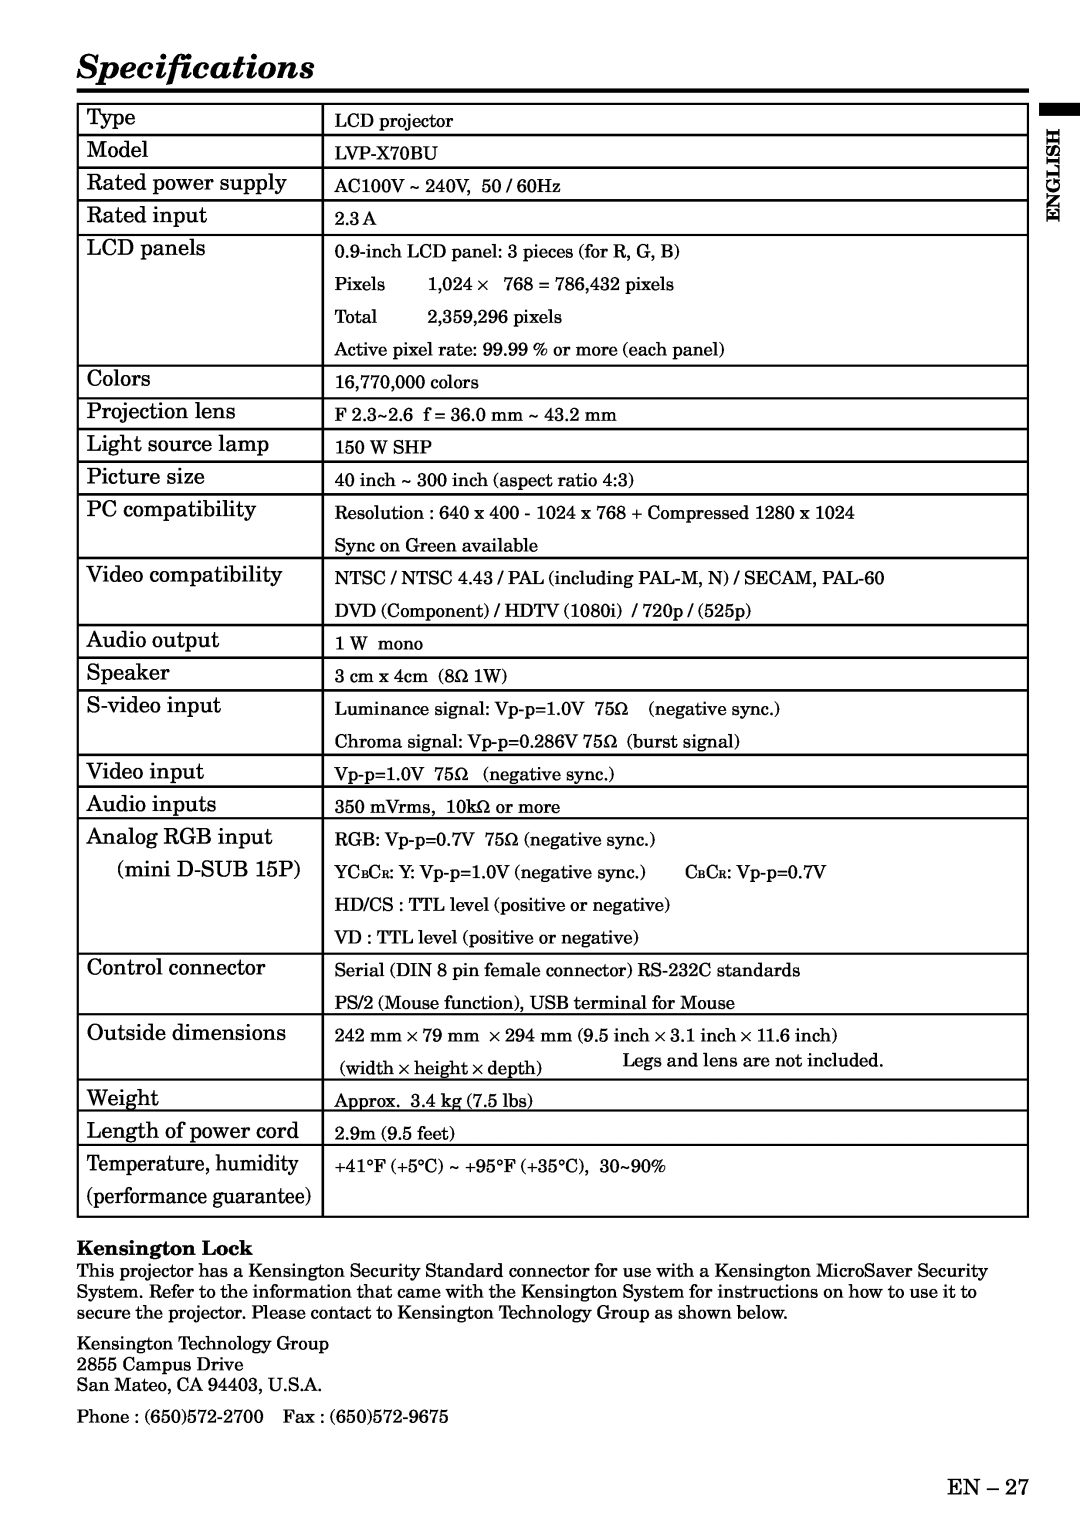 Mitsubishi Electronics X70B user manual Specifications, Kensington Lock 